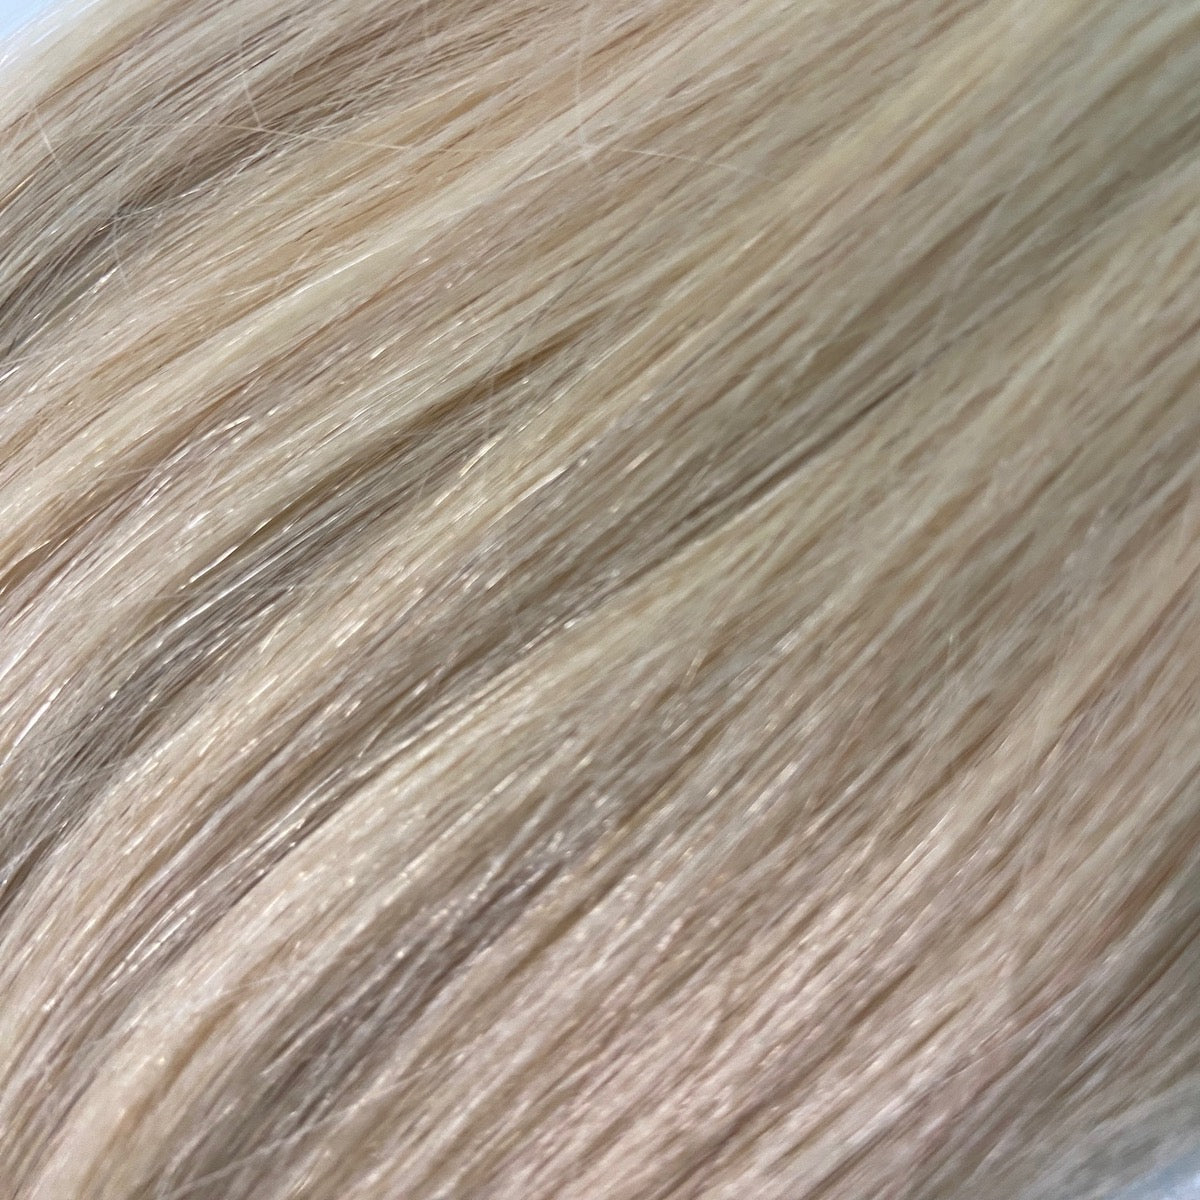 K-Tip 16" 25g Professional Hair Extensions - #22 Light Ash Blonde